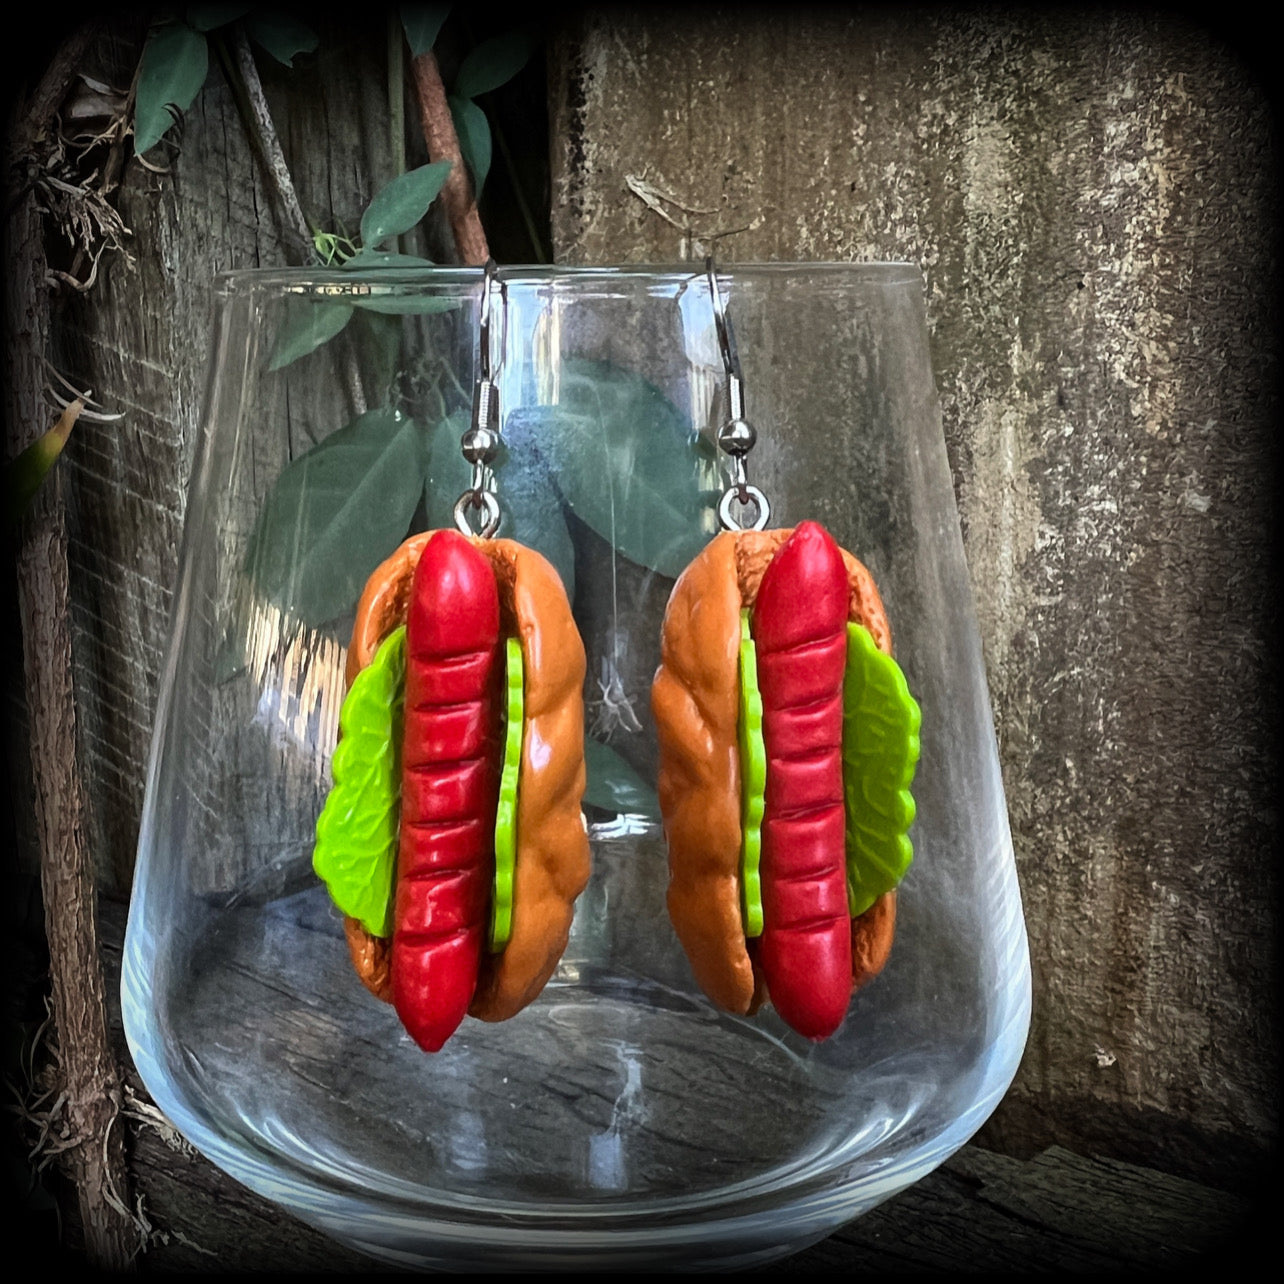 Hot Dog earrings-Novelty earrings